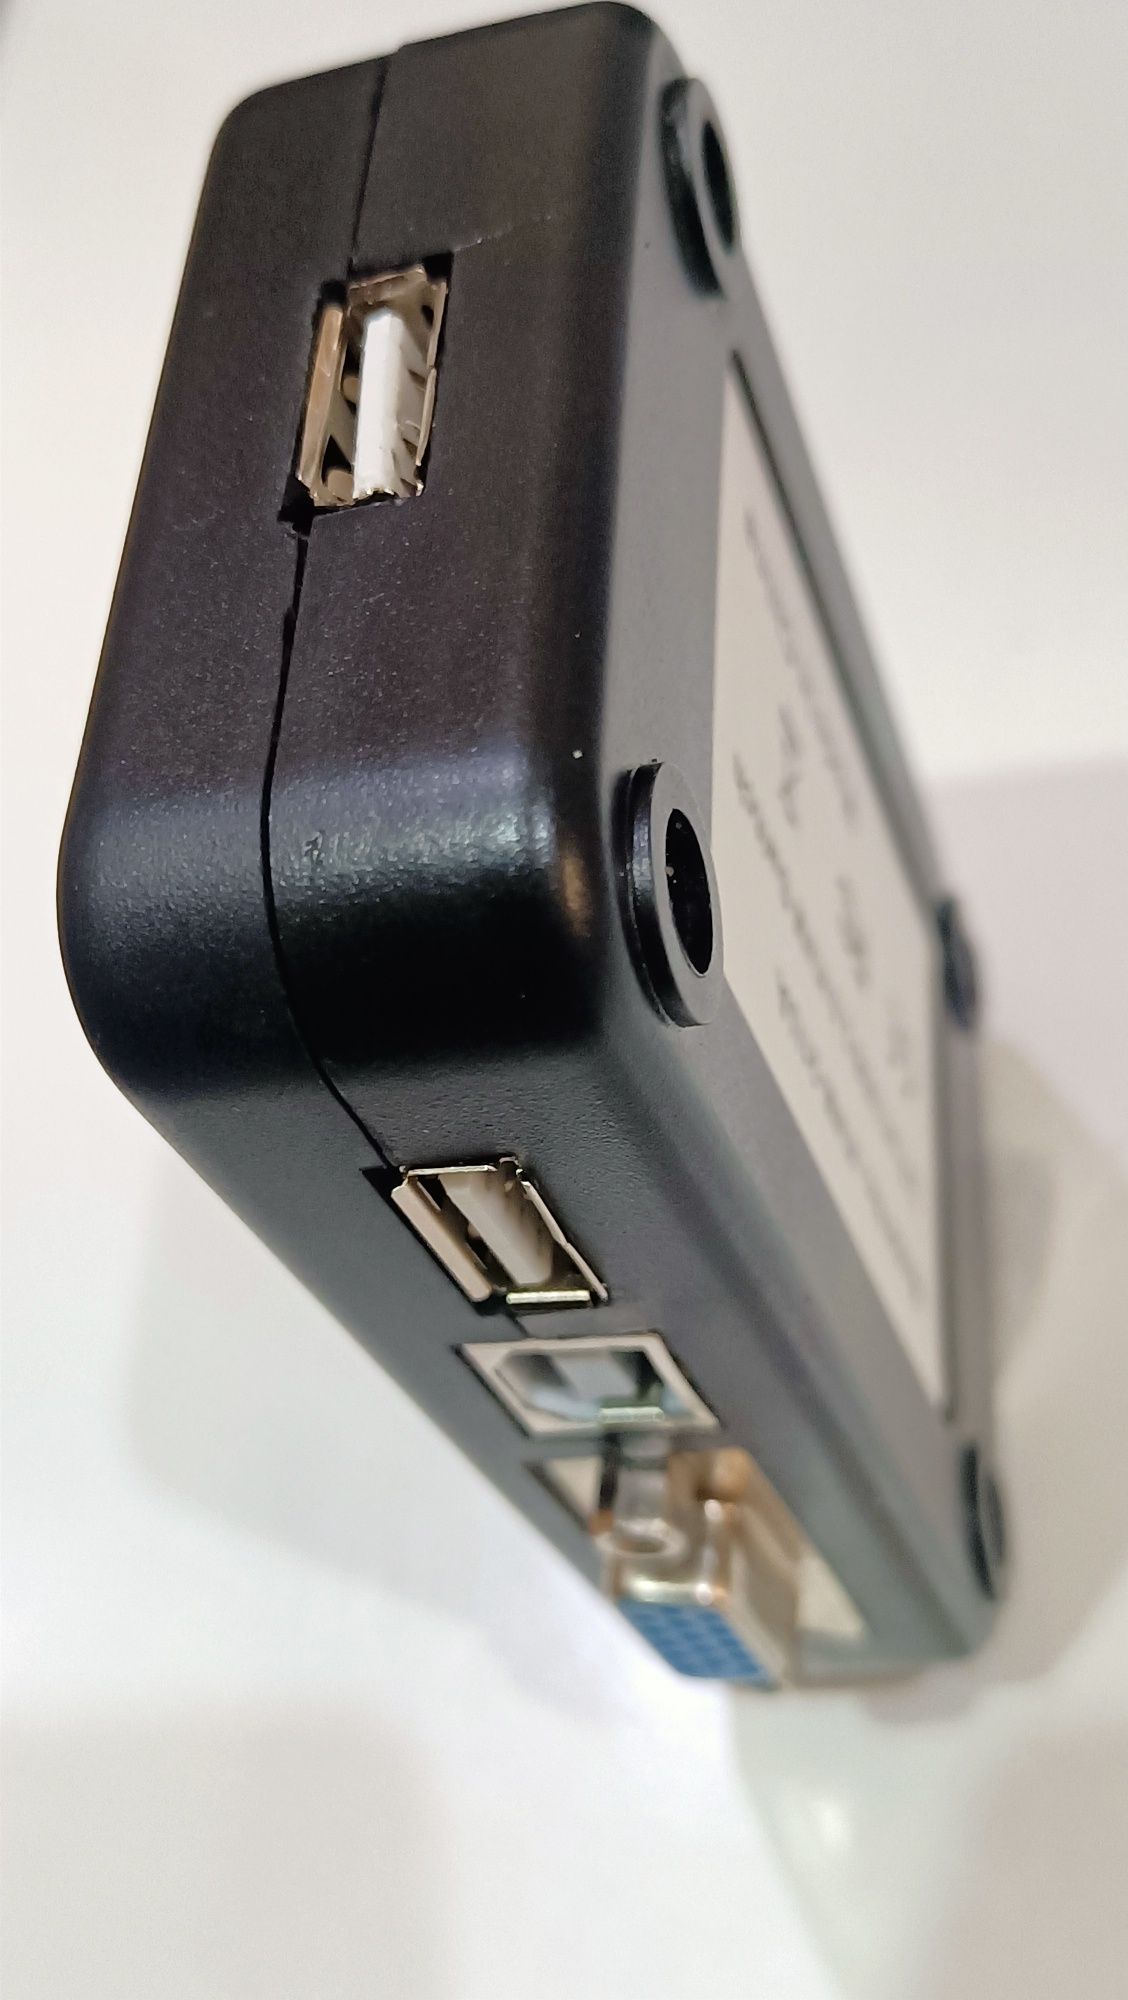 Caixa de Switch KVM VGA USB de 2 Portas p/Mauser, Teclado, Monitor.